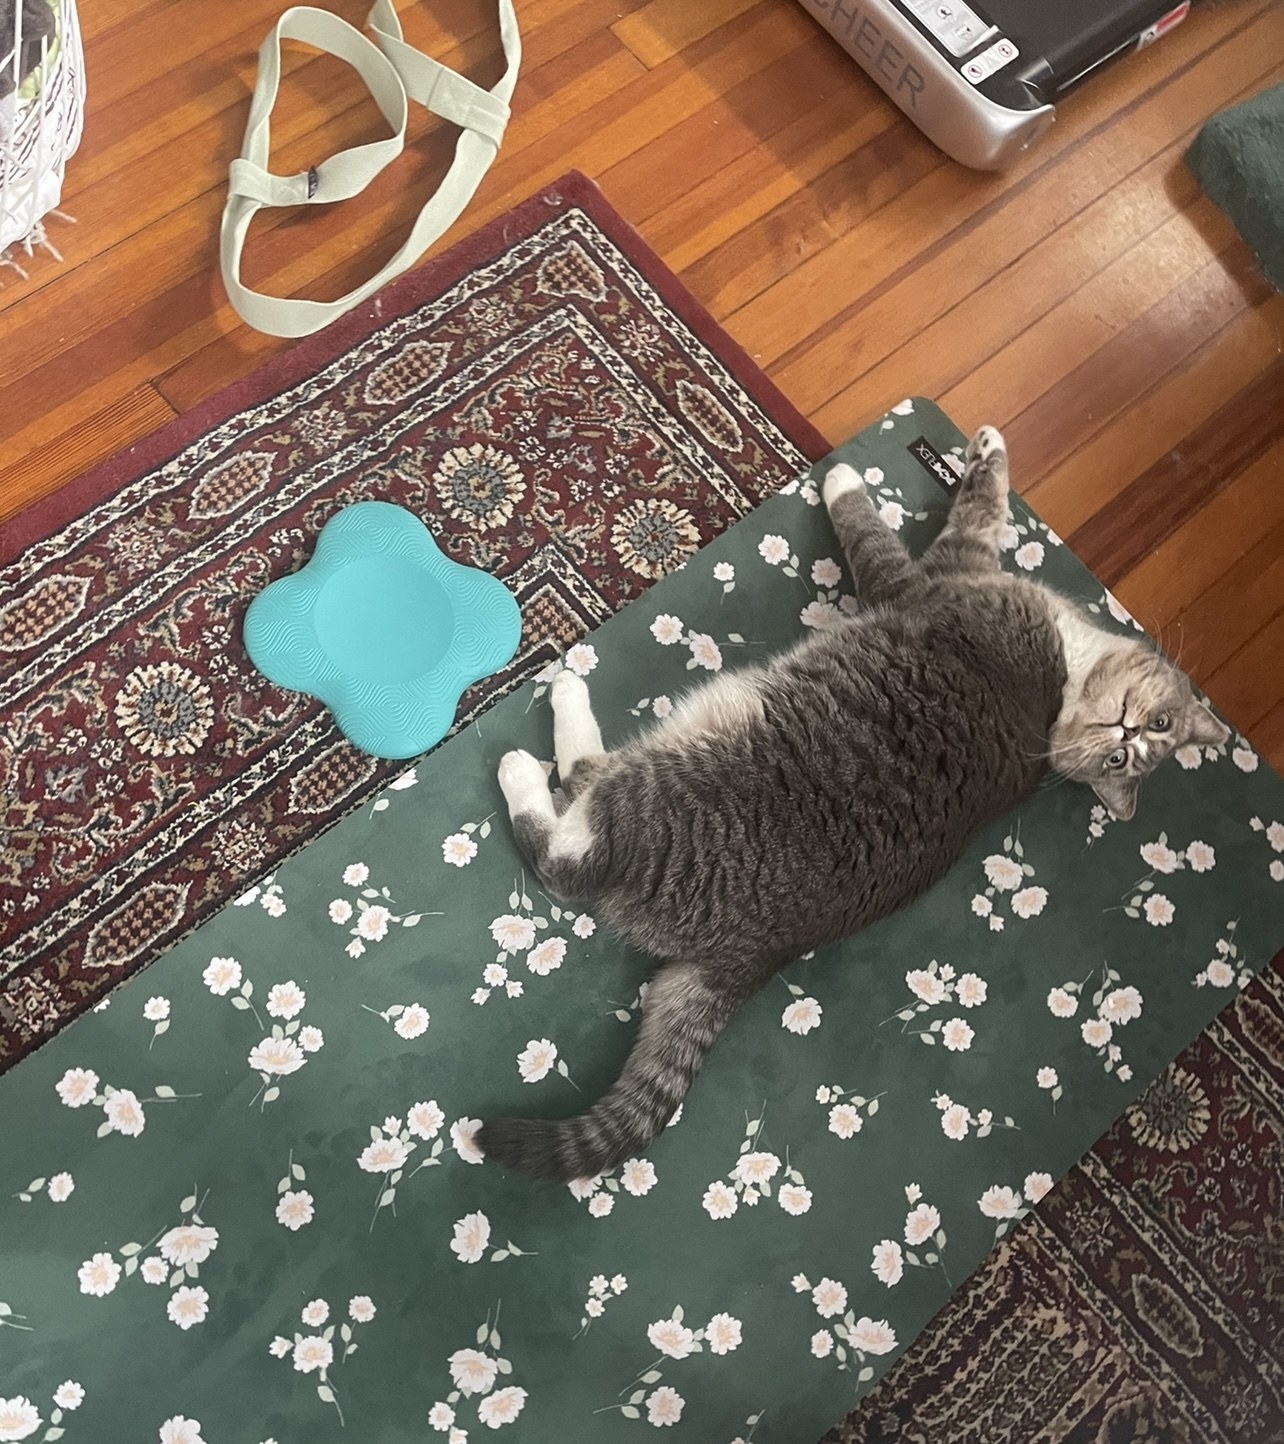 A cat on a yoga mat